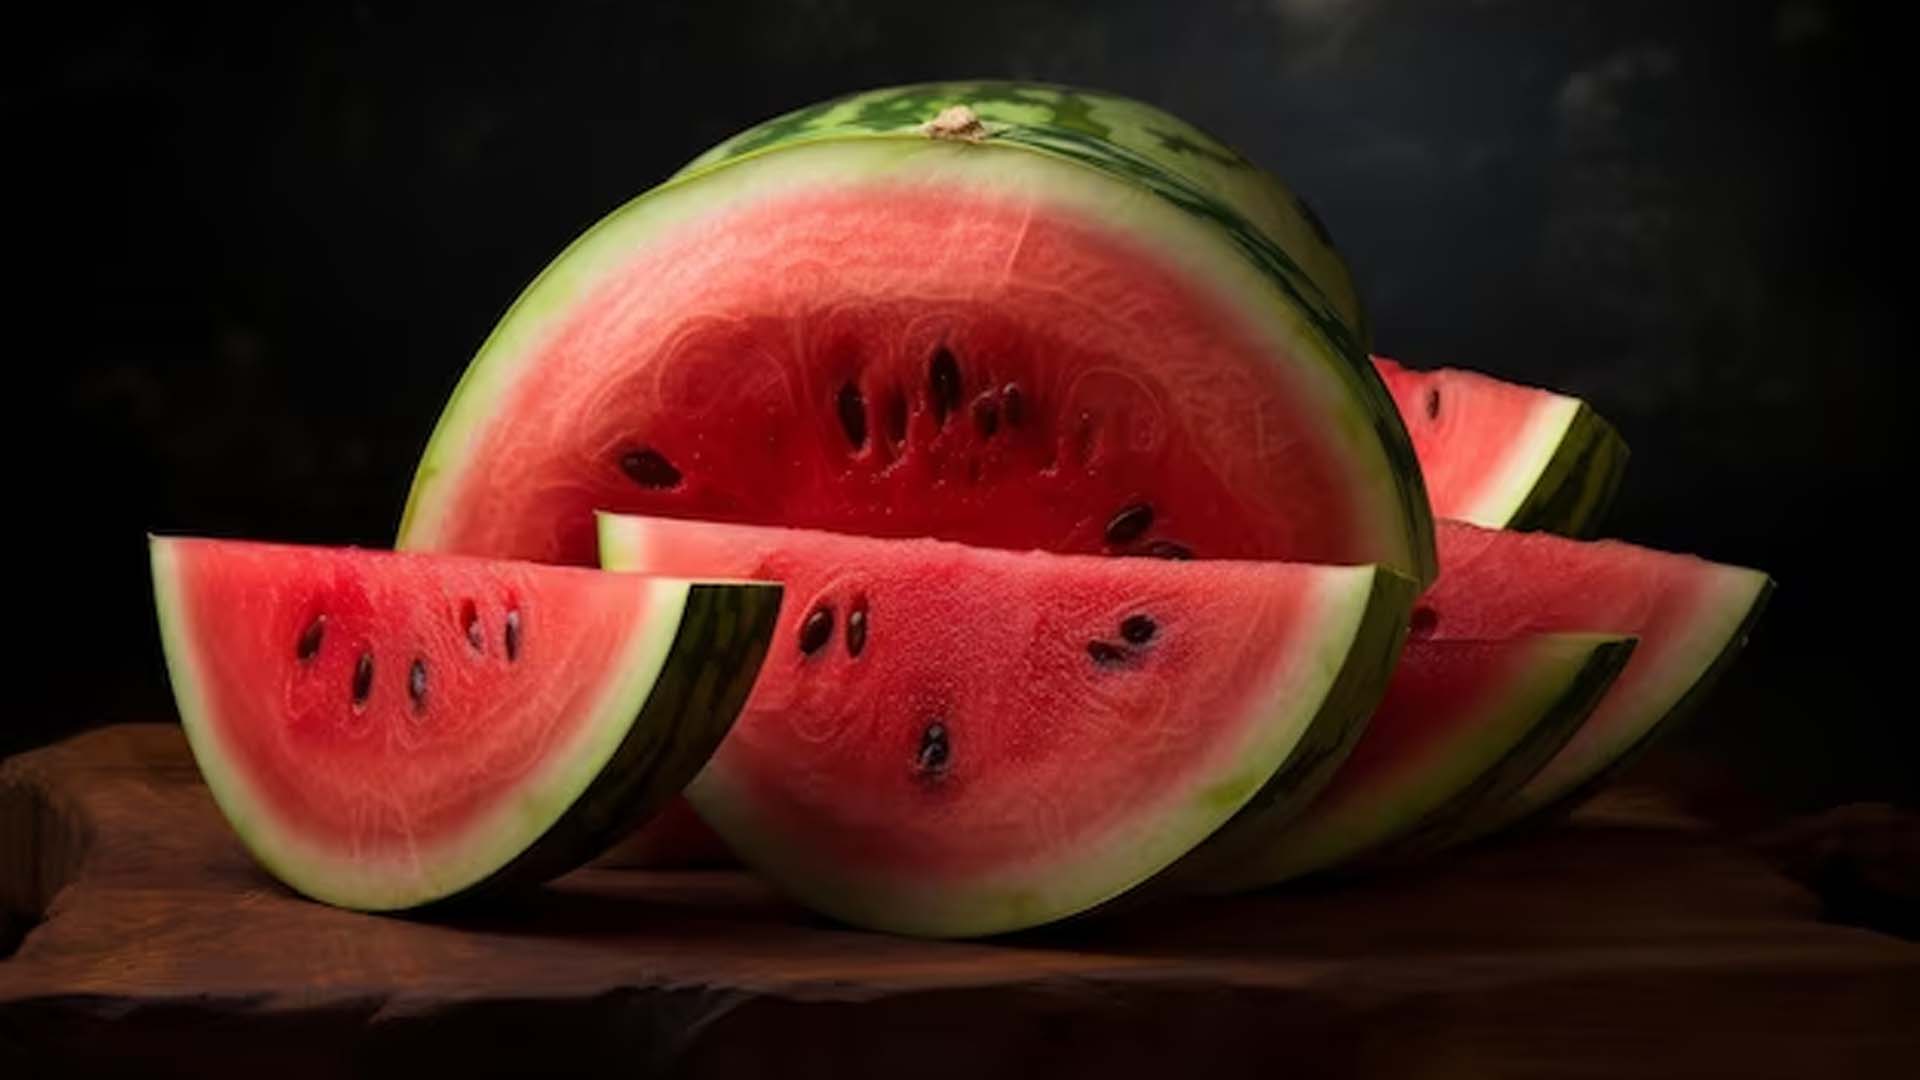 Watermelon sliced